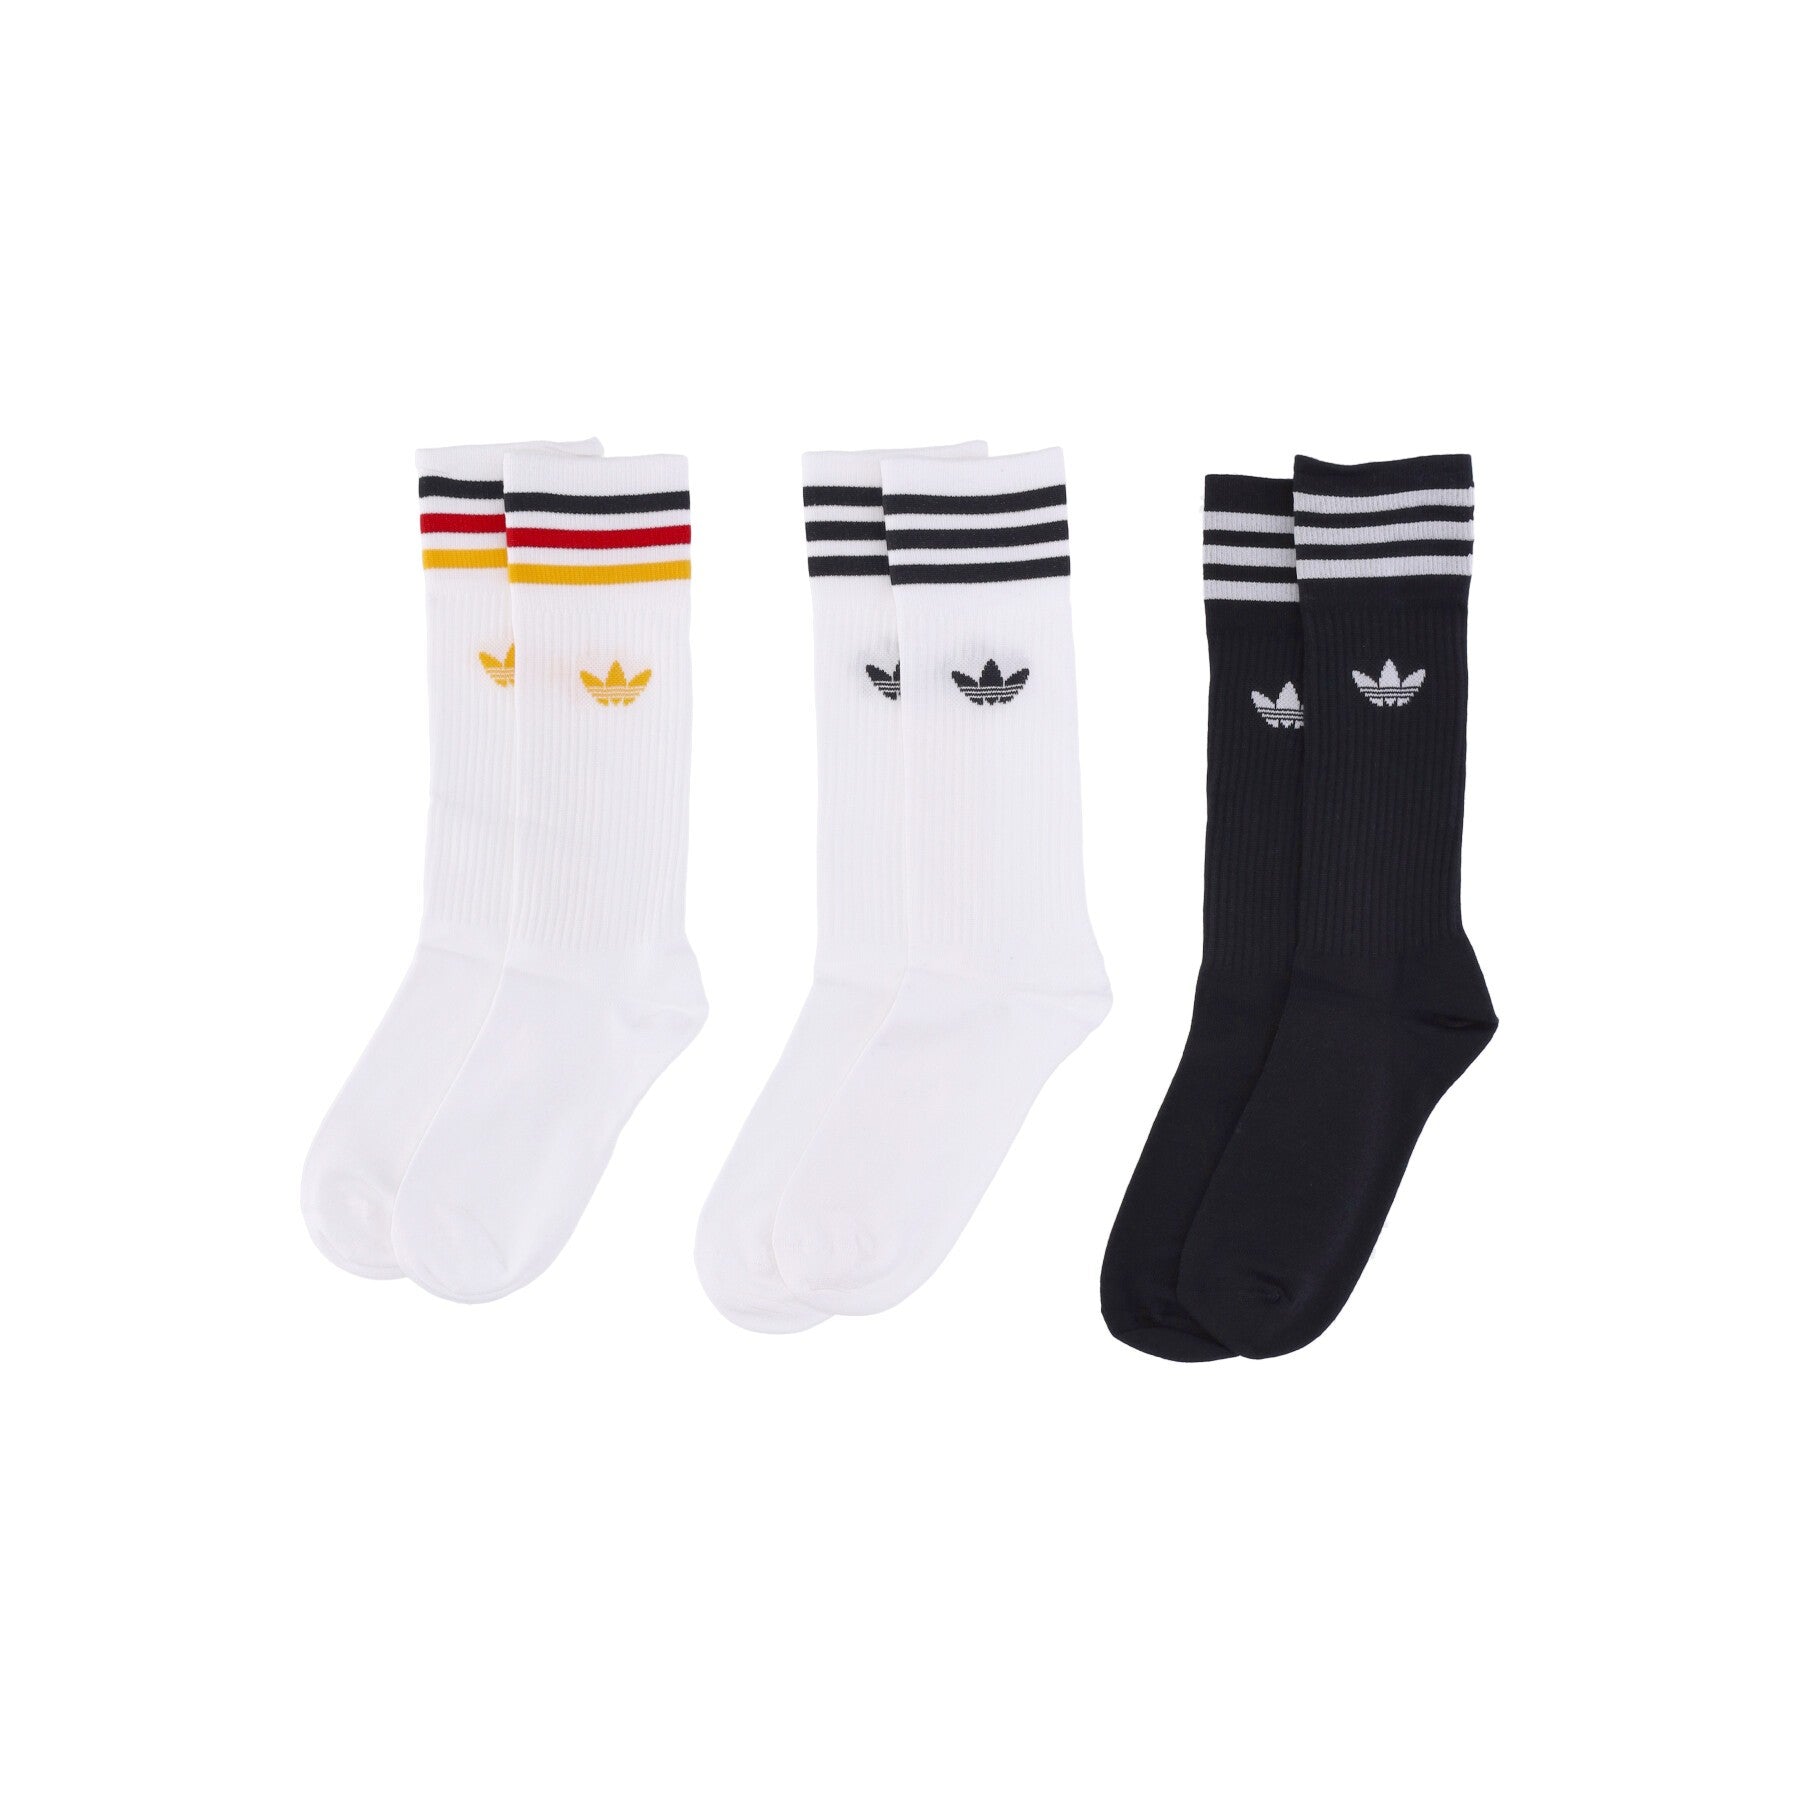 Adidas, Calza Media Uomo Solid Crew Socks, White/multicolor